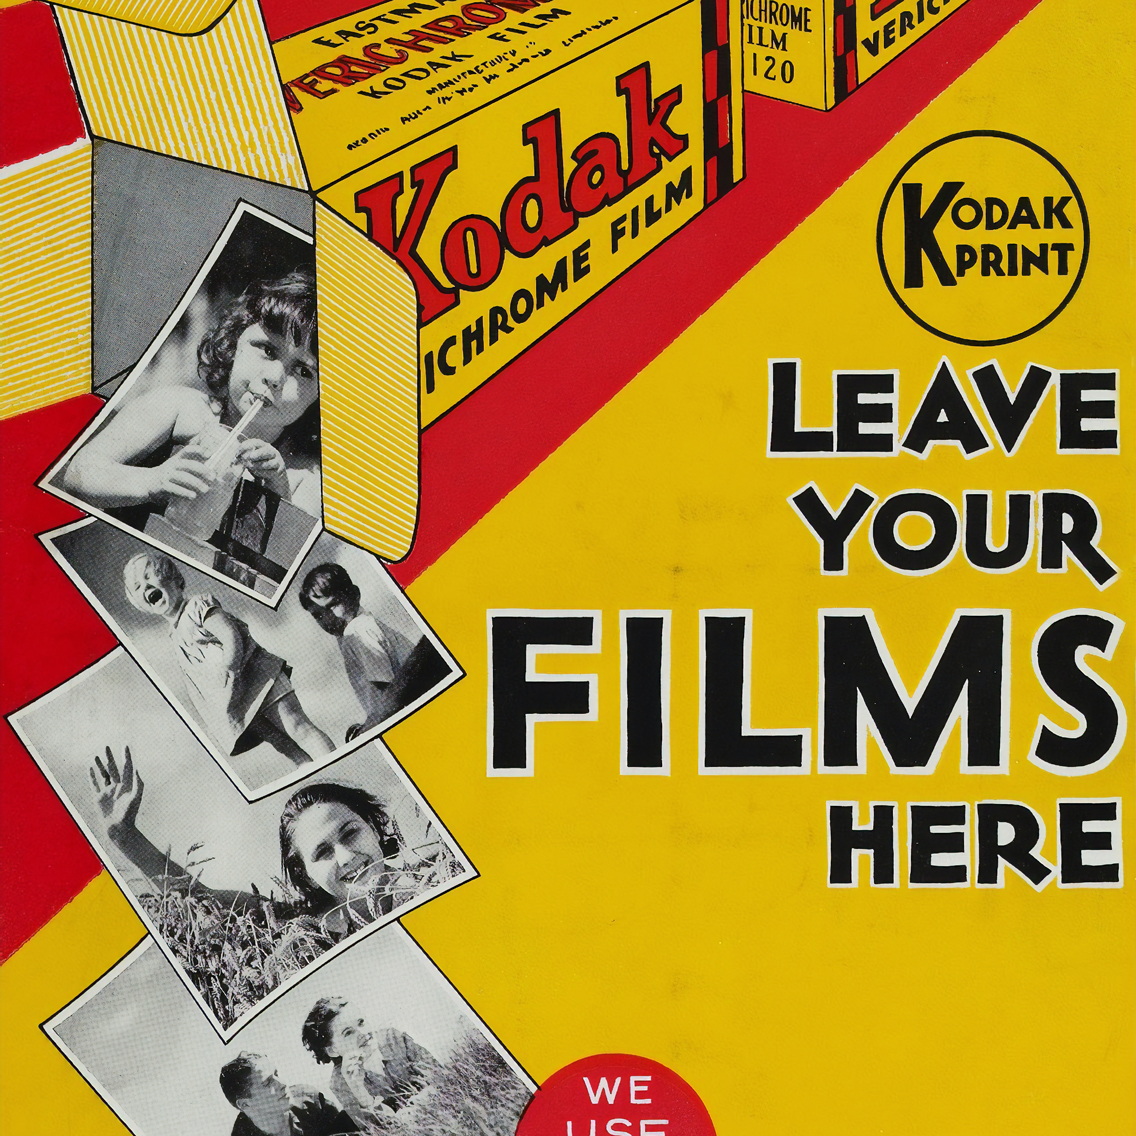 Retro Kodak Print advert